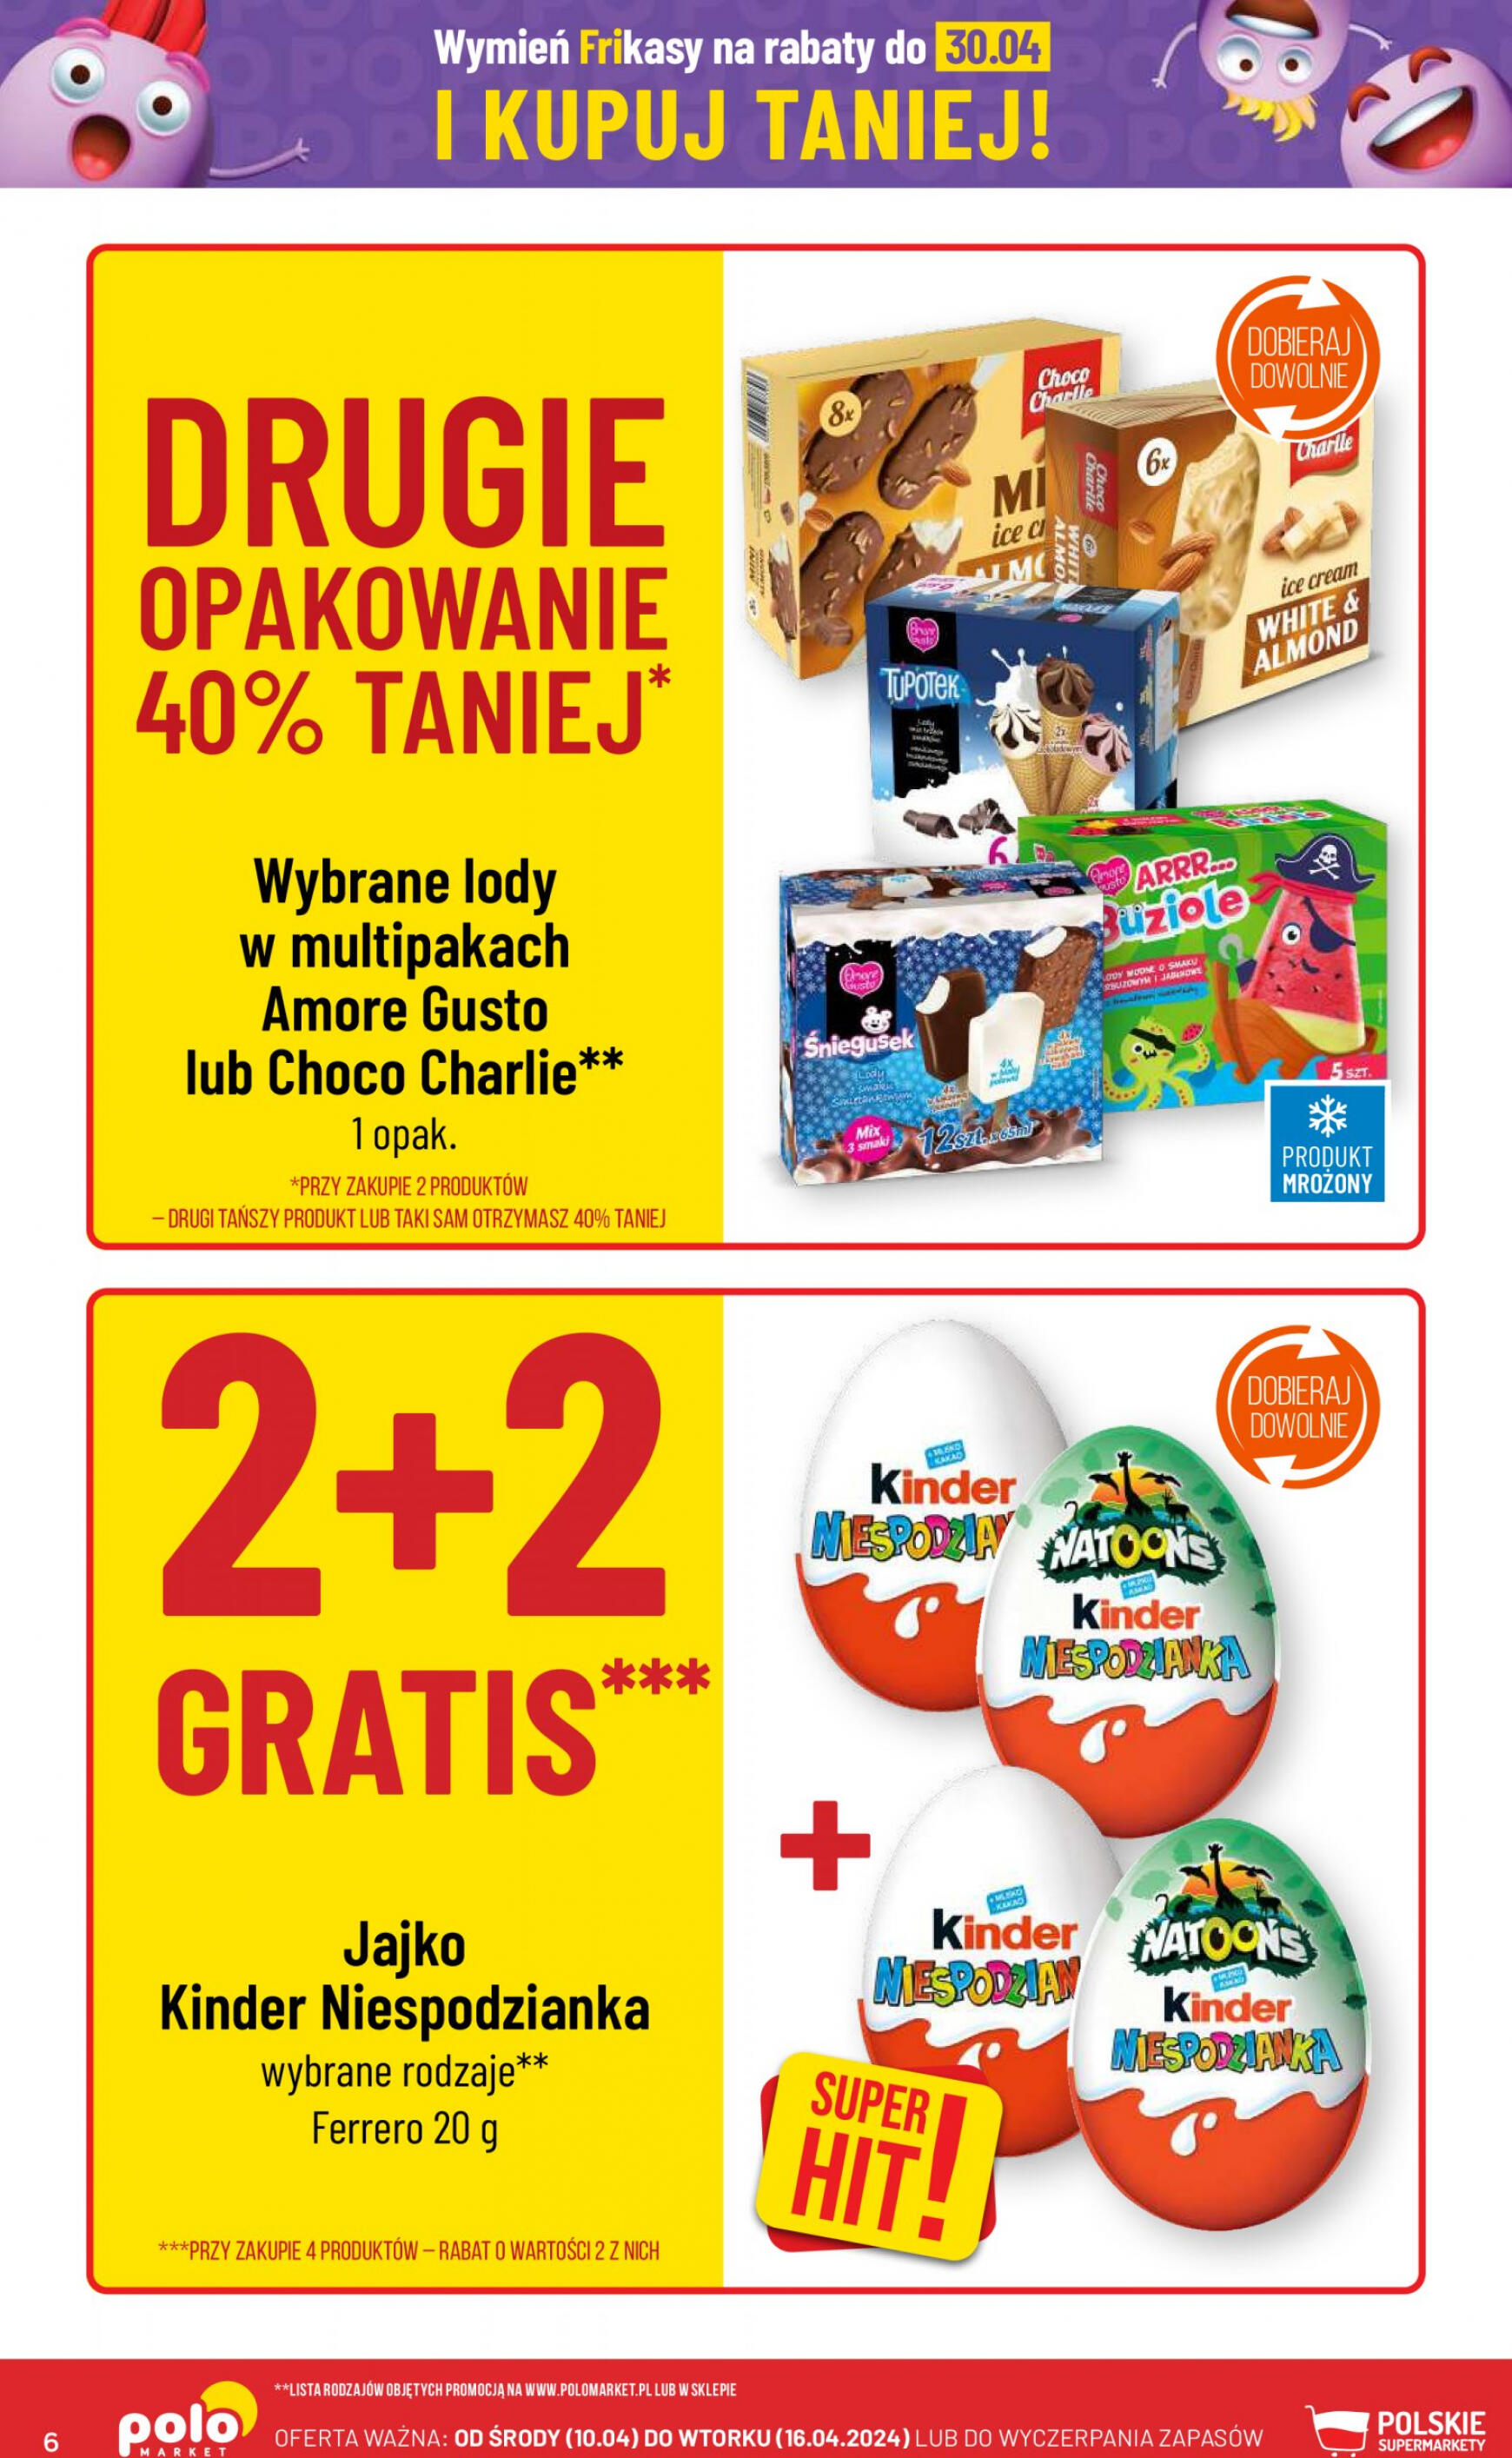 polomarket - POLO market gazetka aktualna ważna od 10.04. - 16.04. - page: 6